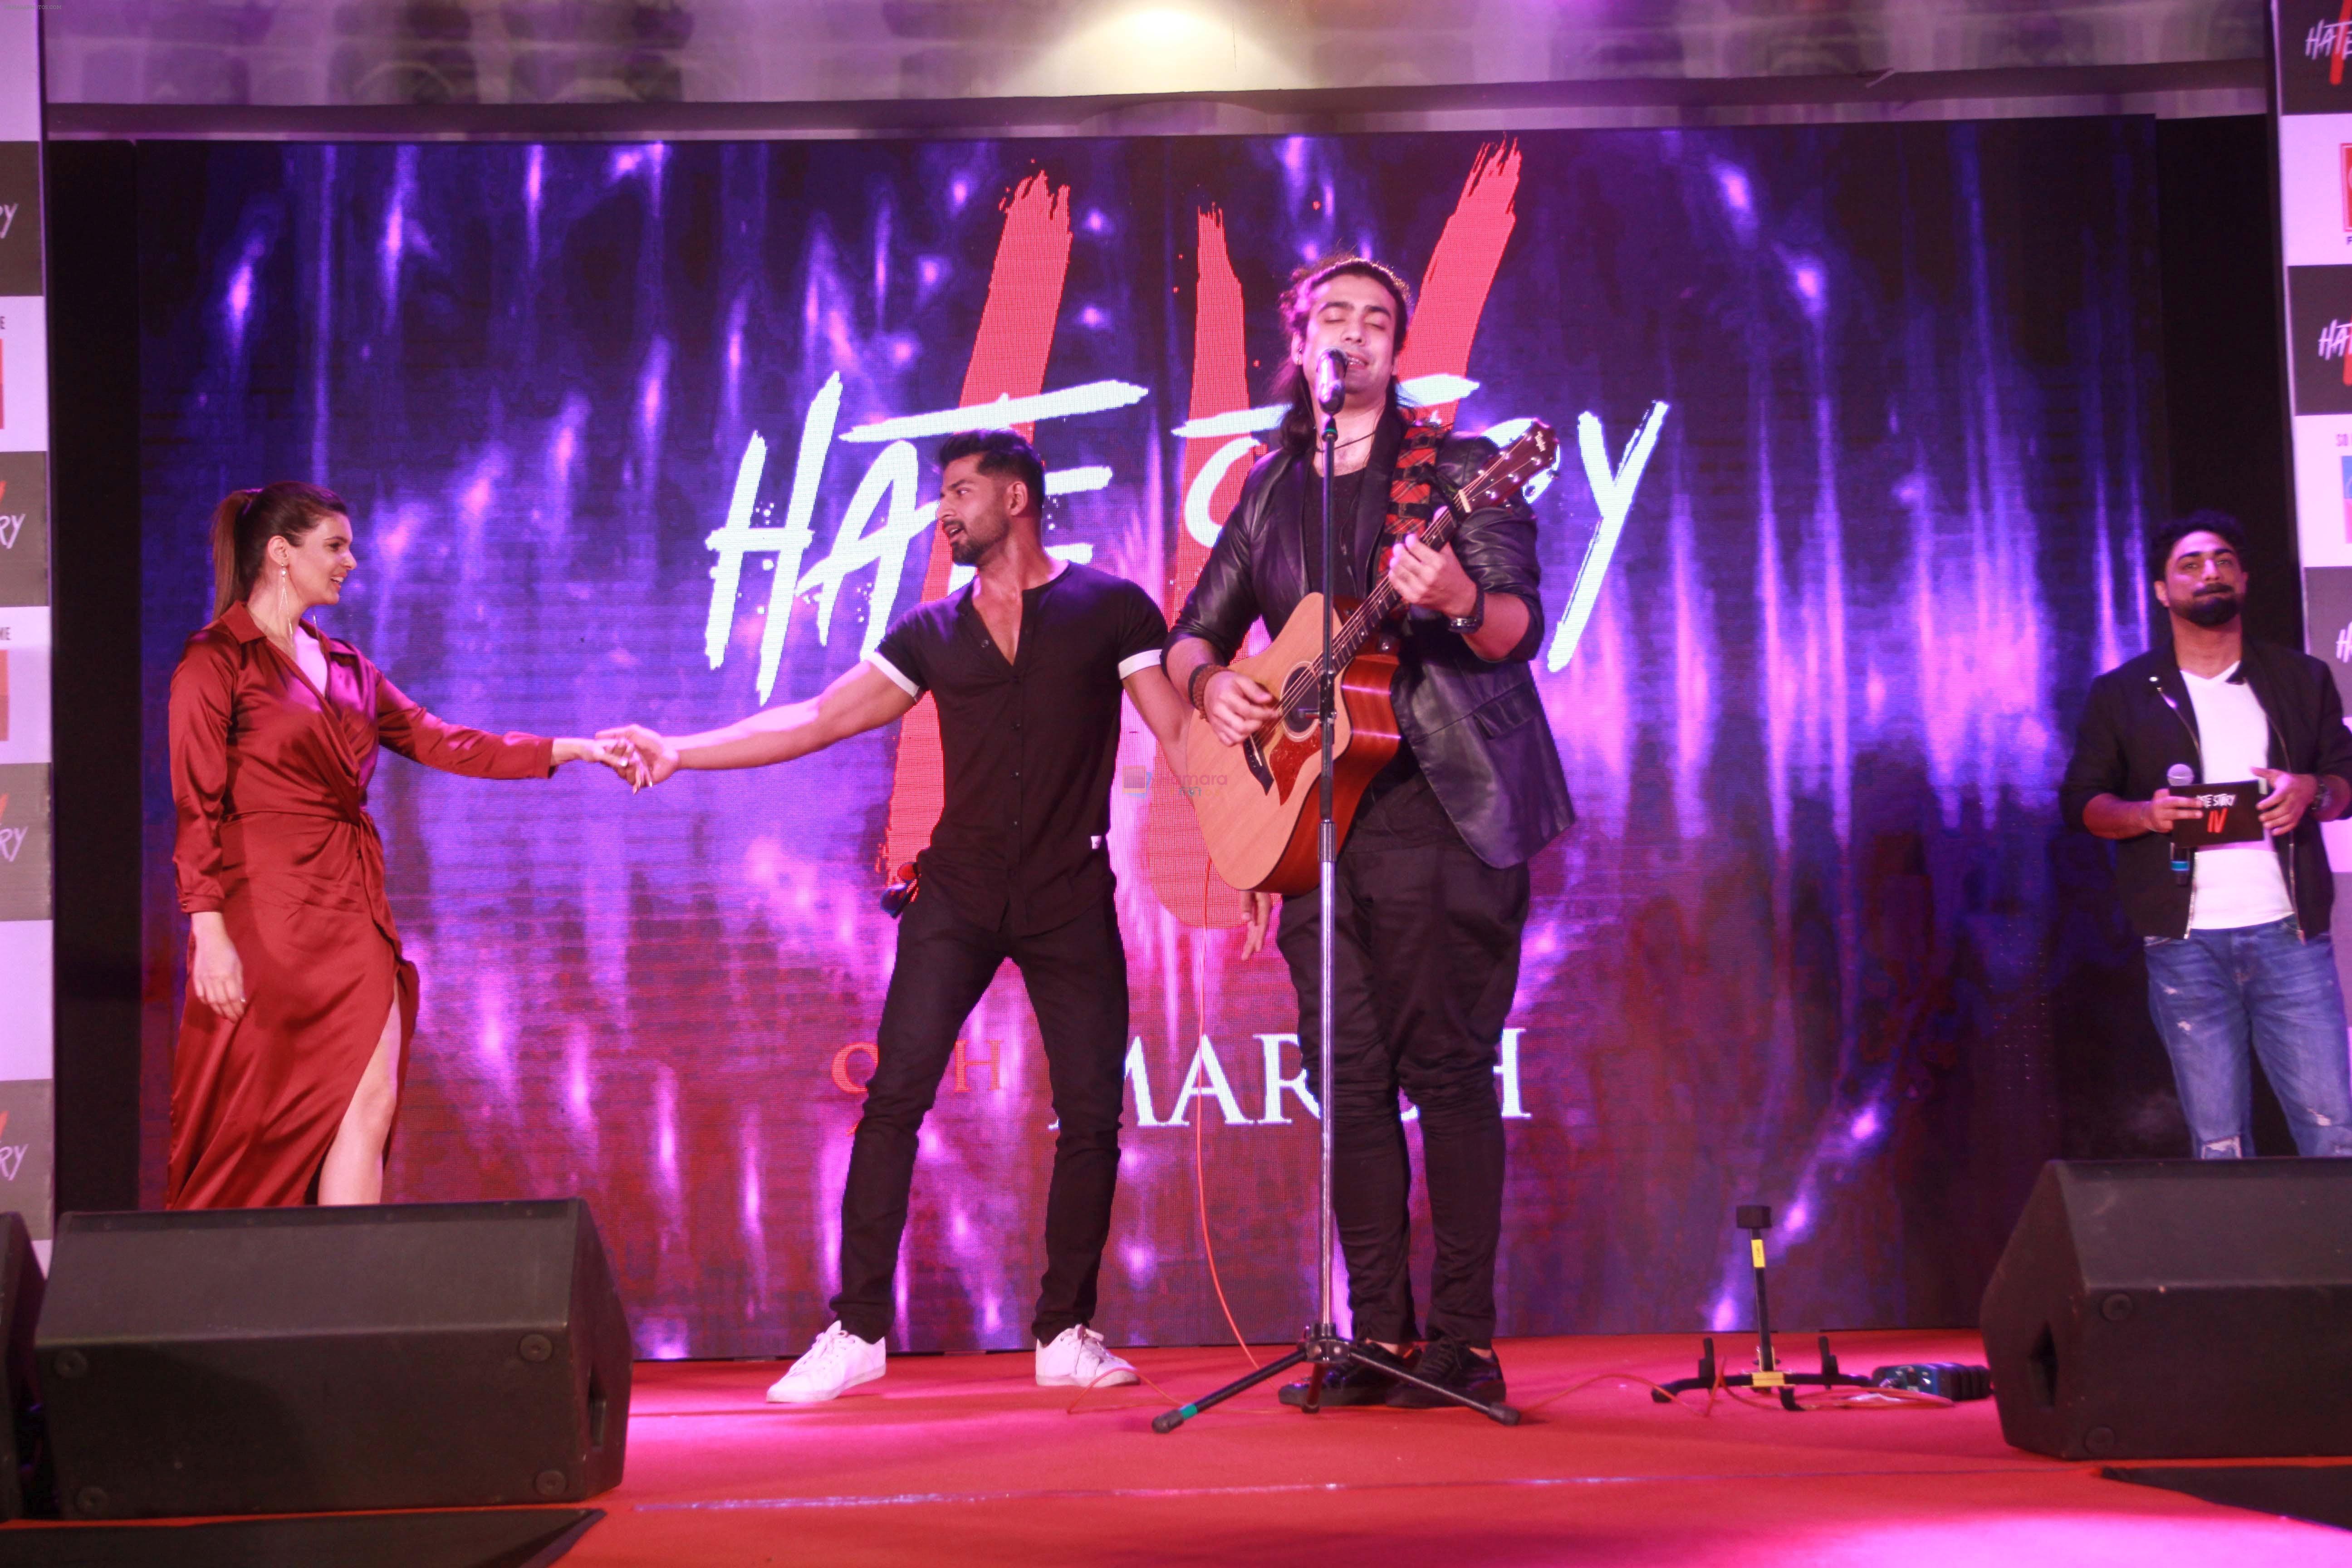 Vivan Bhatena, Ihana Dhillon at Hate story 4 music concert at R city mall ghatkopar, mumbai on 4th March 2018